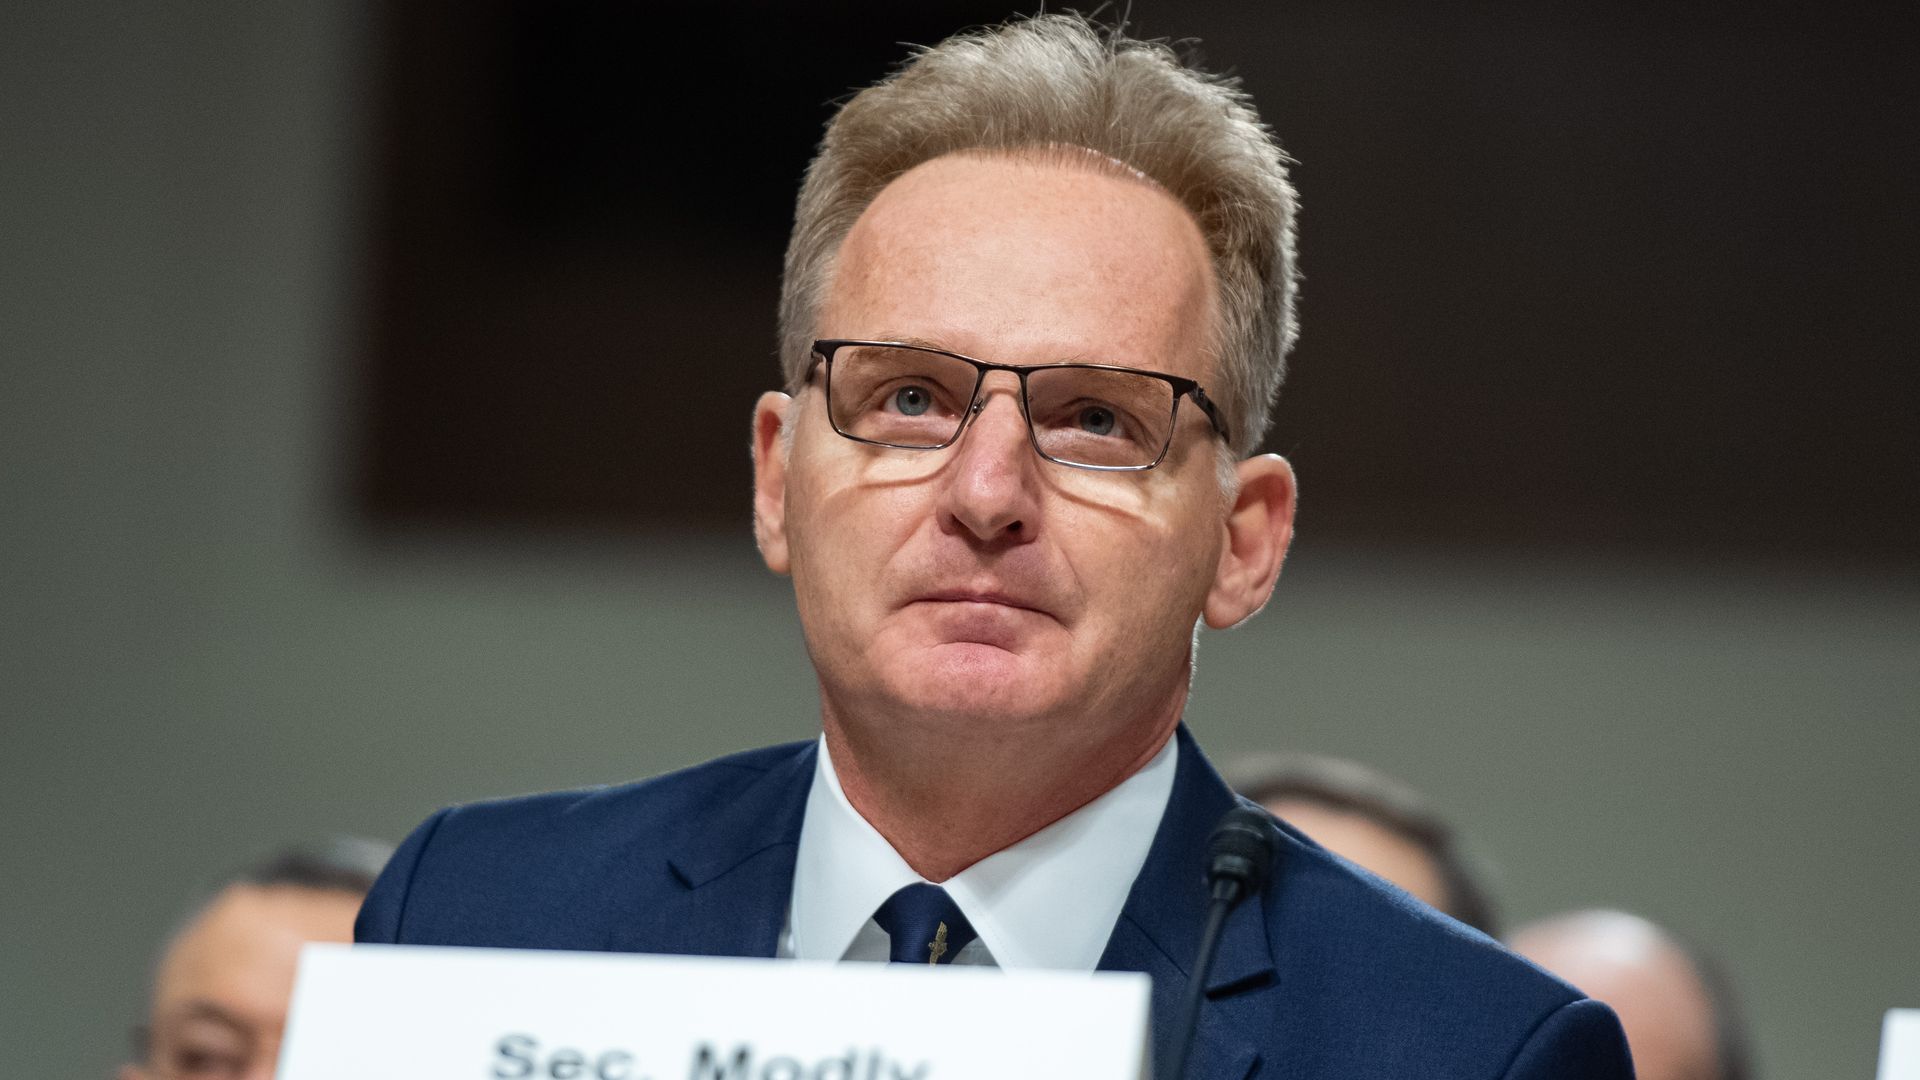 Acting Secretary of the Navy Thomas Modly testifies in Washington, DC, December 3, 2019